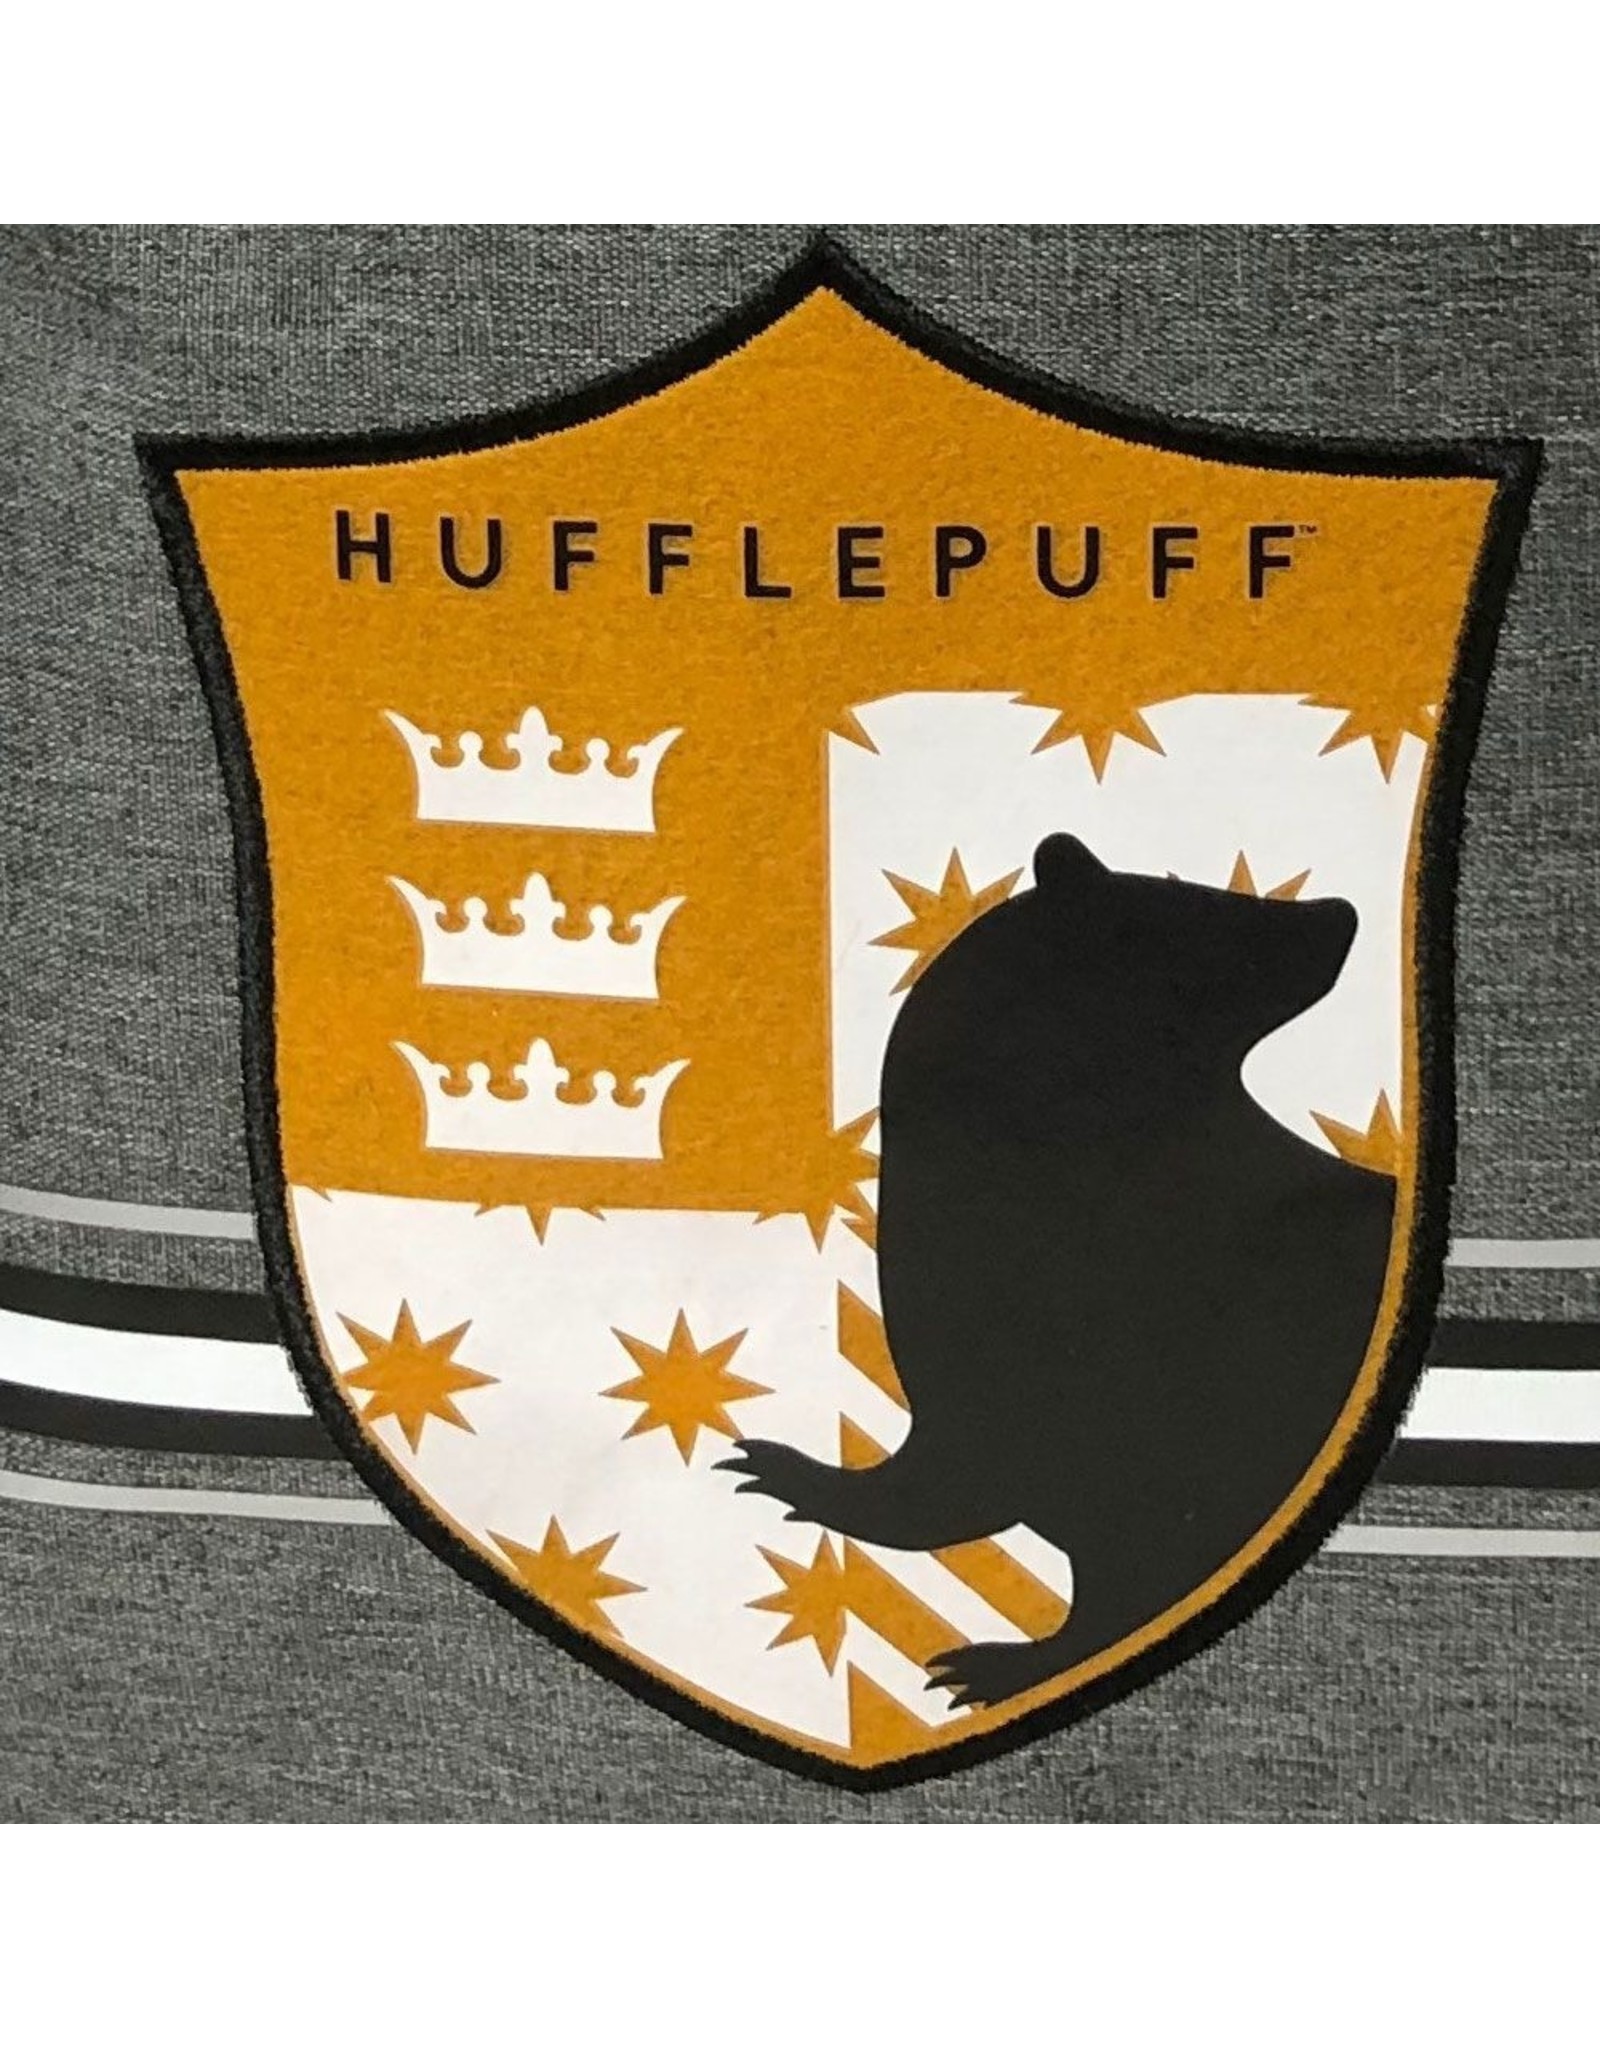 Bioworld Merchandise - Hufflepuff Premium laptop rugzak 15"